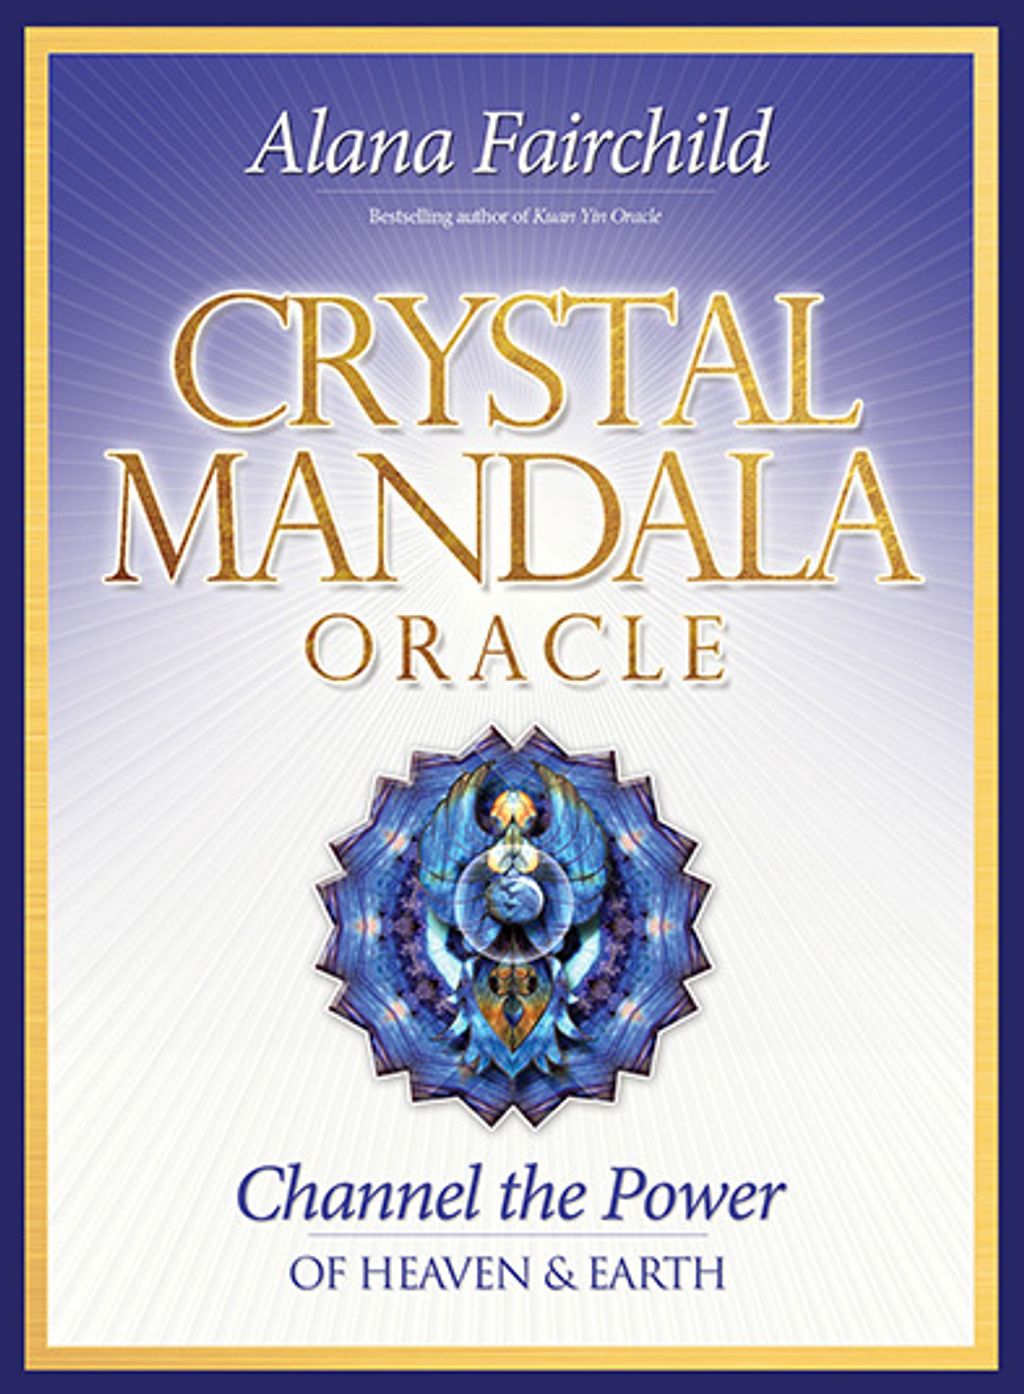 水晶曼陀羅神諭卡： Crystal Mandala Oracle.jpg